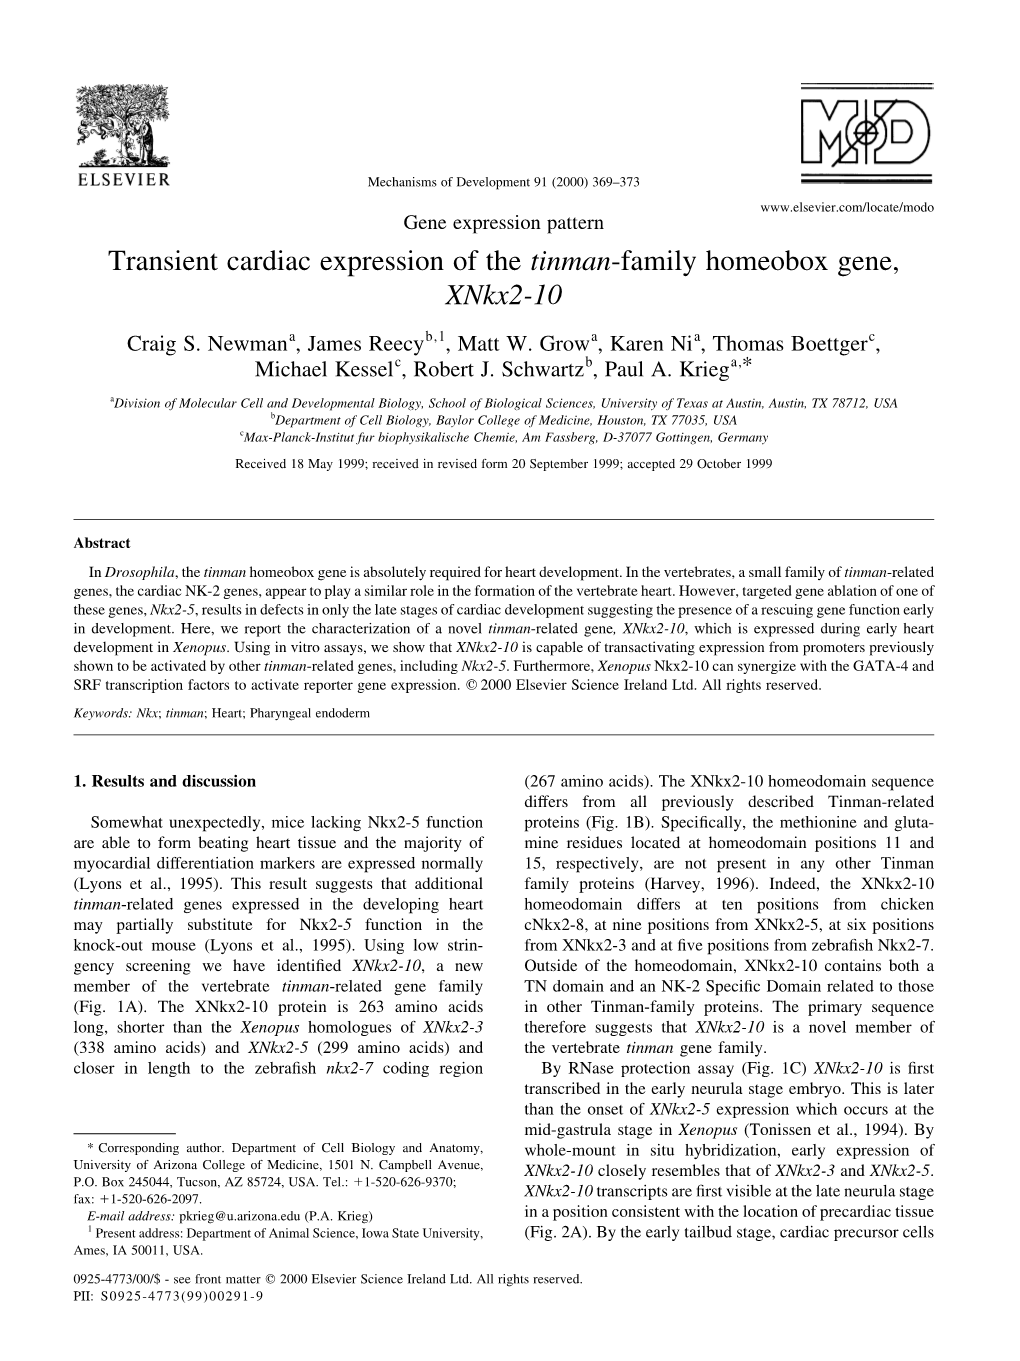 Transient Cardiac Expression of the Tinman-Family Homeobox Gene, Xnkx2-10